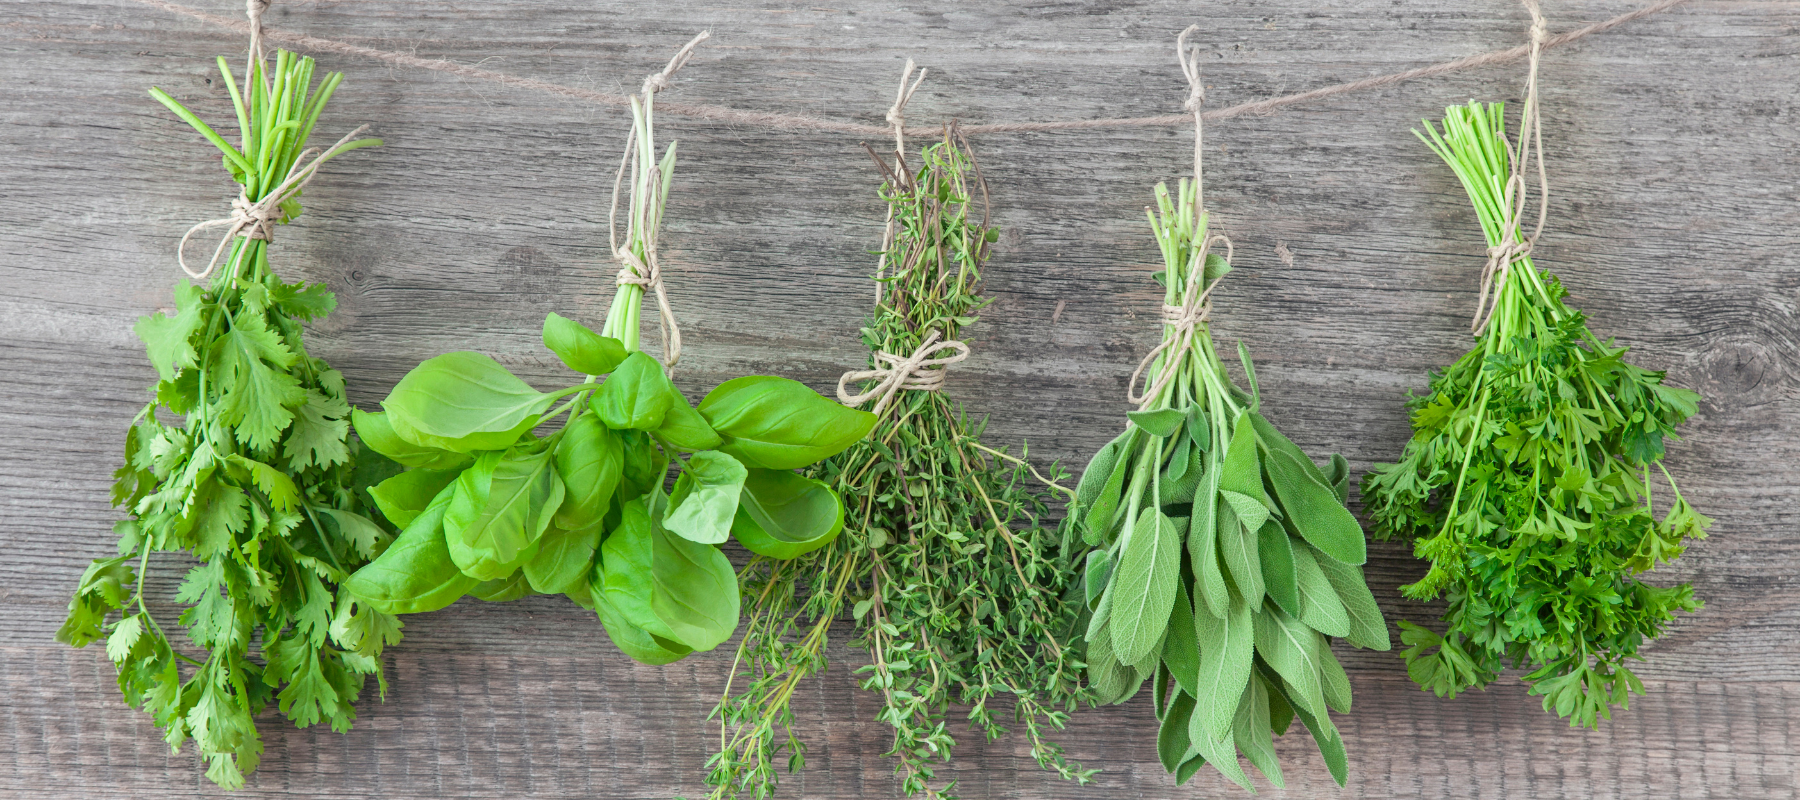 bundles of green herbs